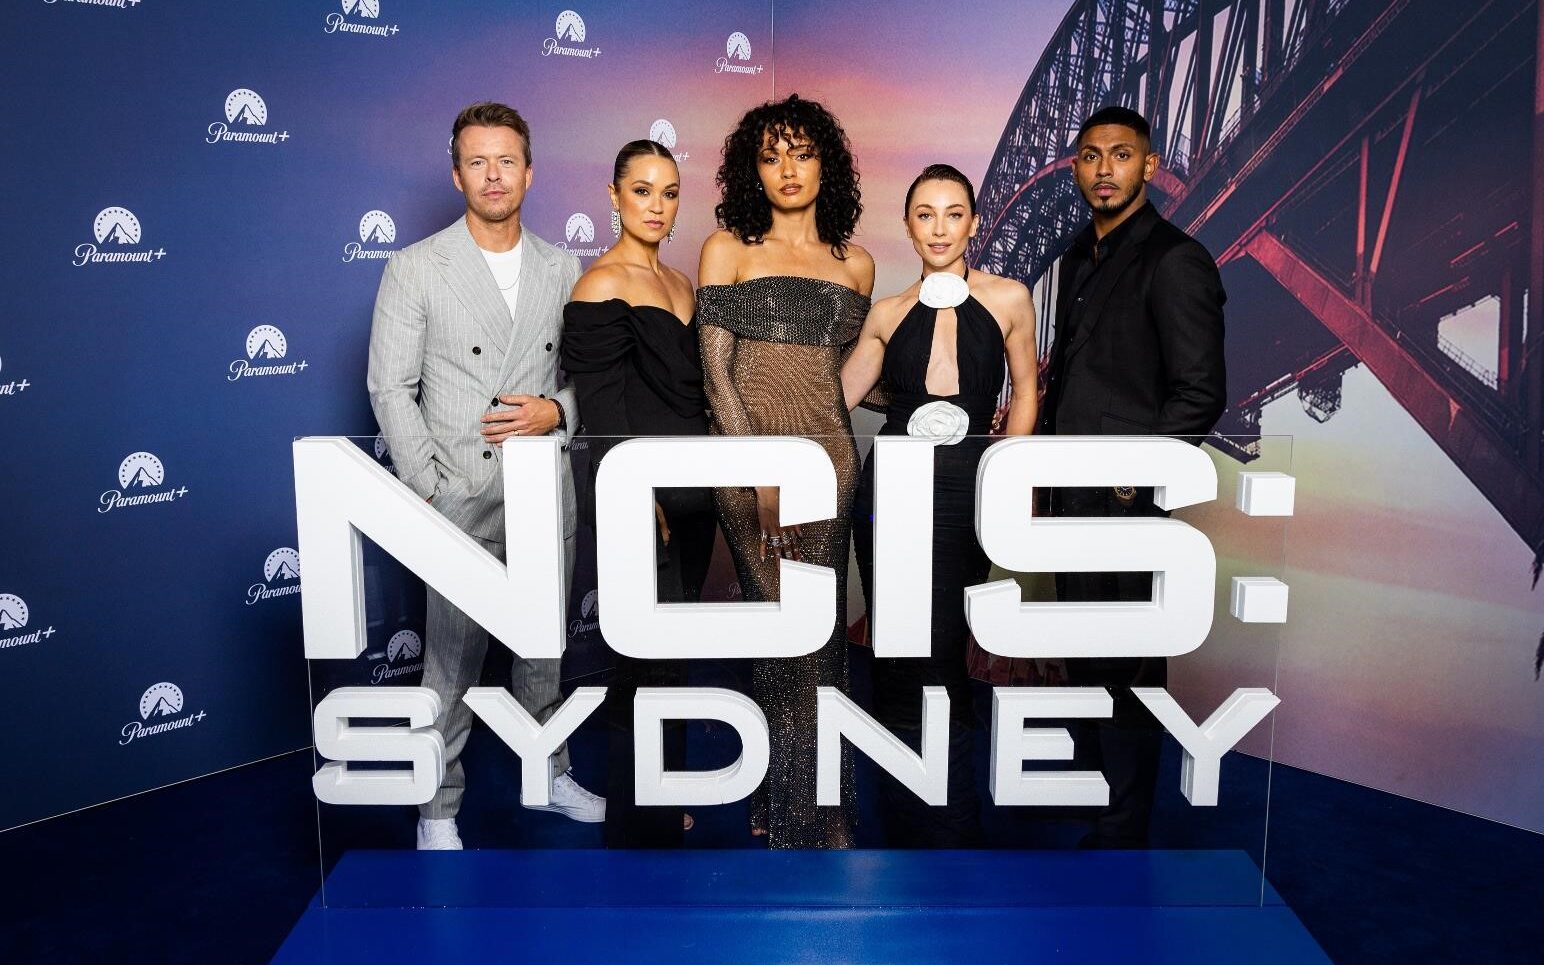 NCIS: Sydney on Paramount+